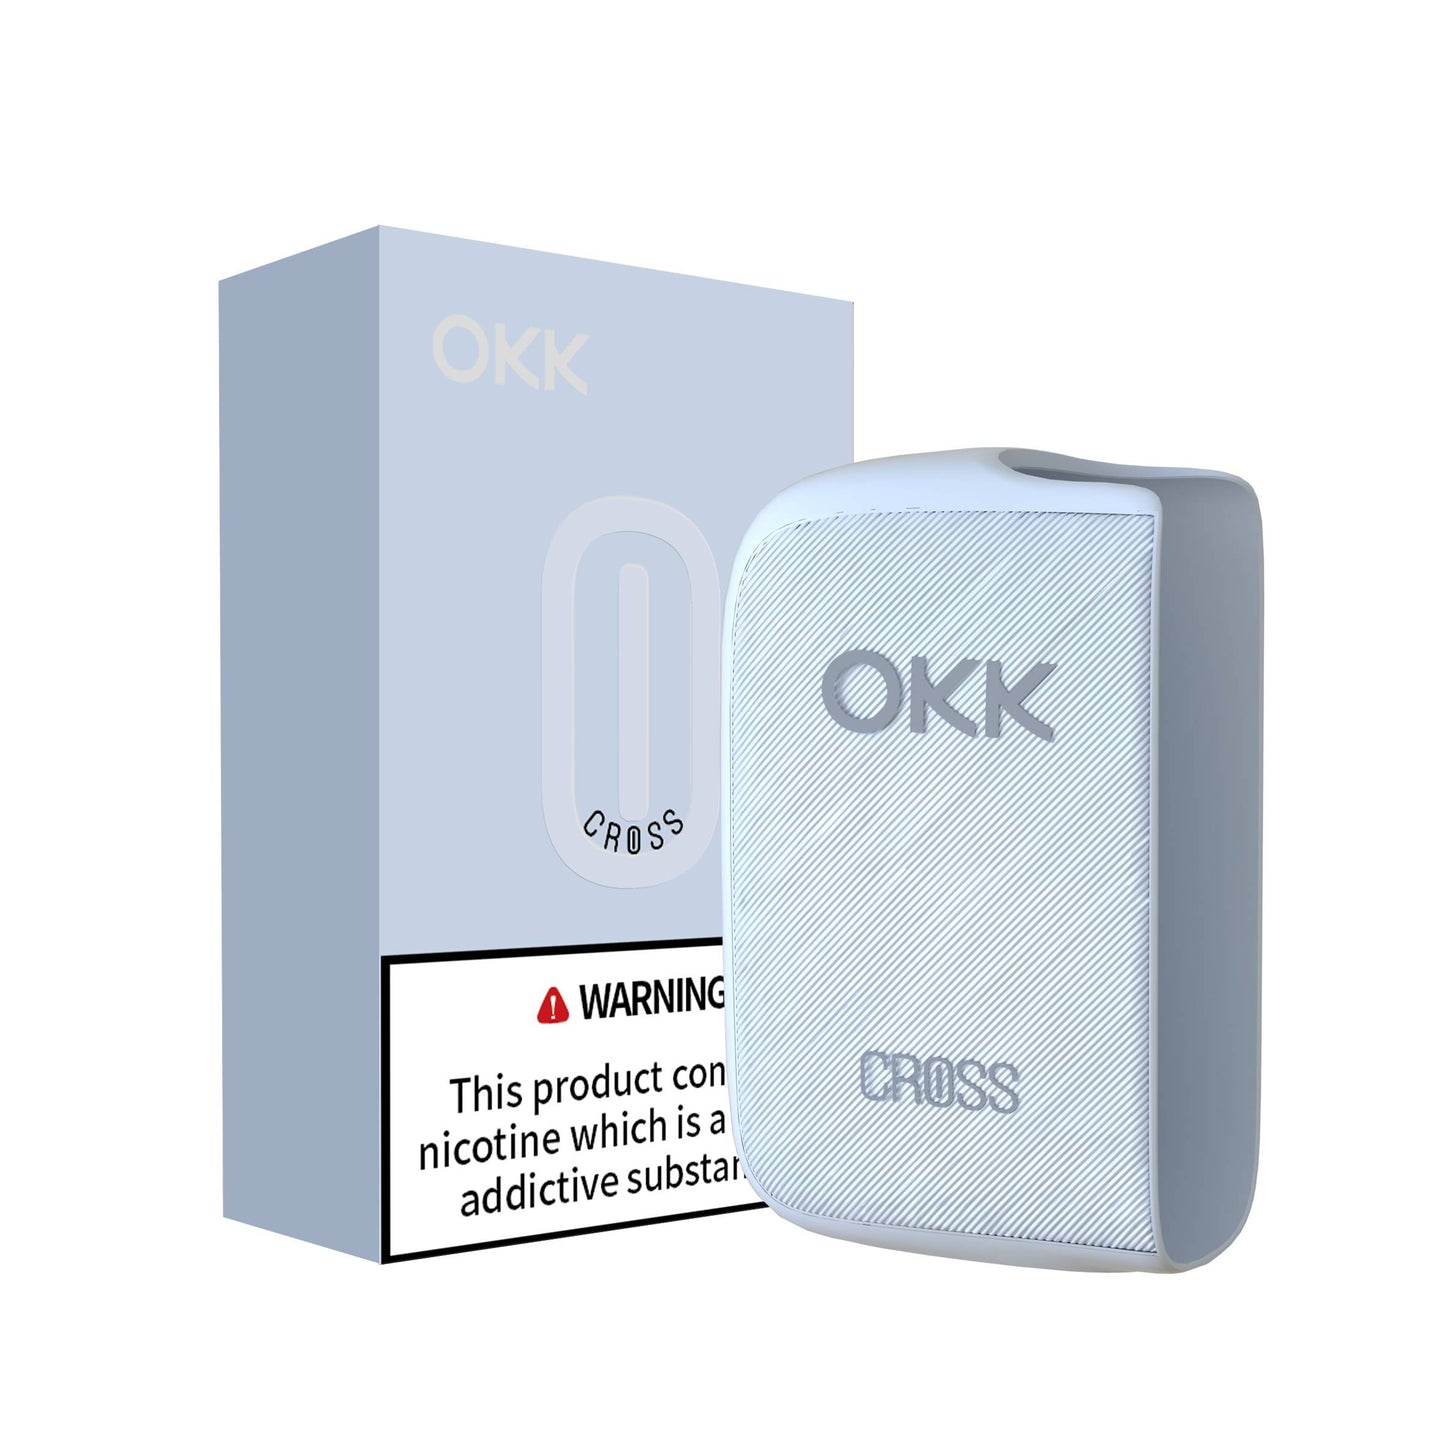 Okk Cross Device/Battery